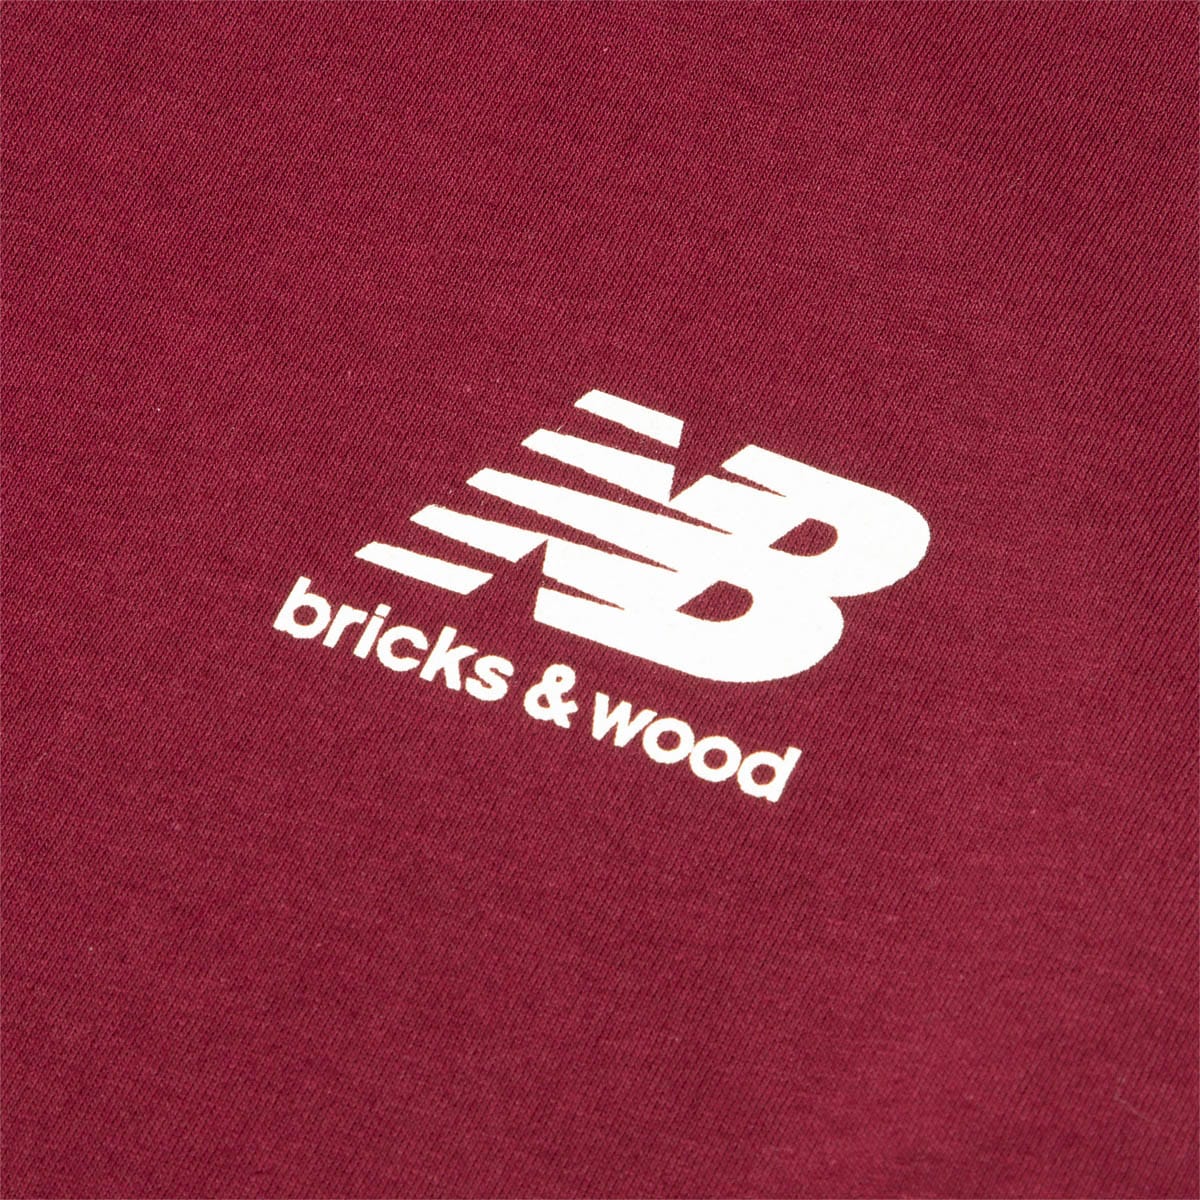 Bricks & Wood T-Shirts x New Balance TEE